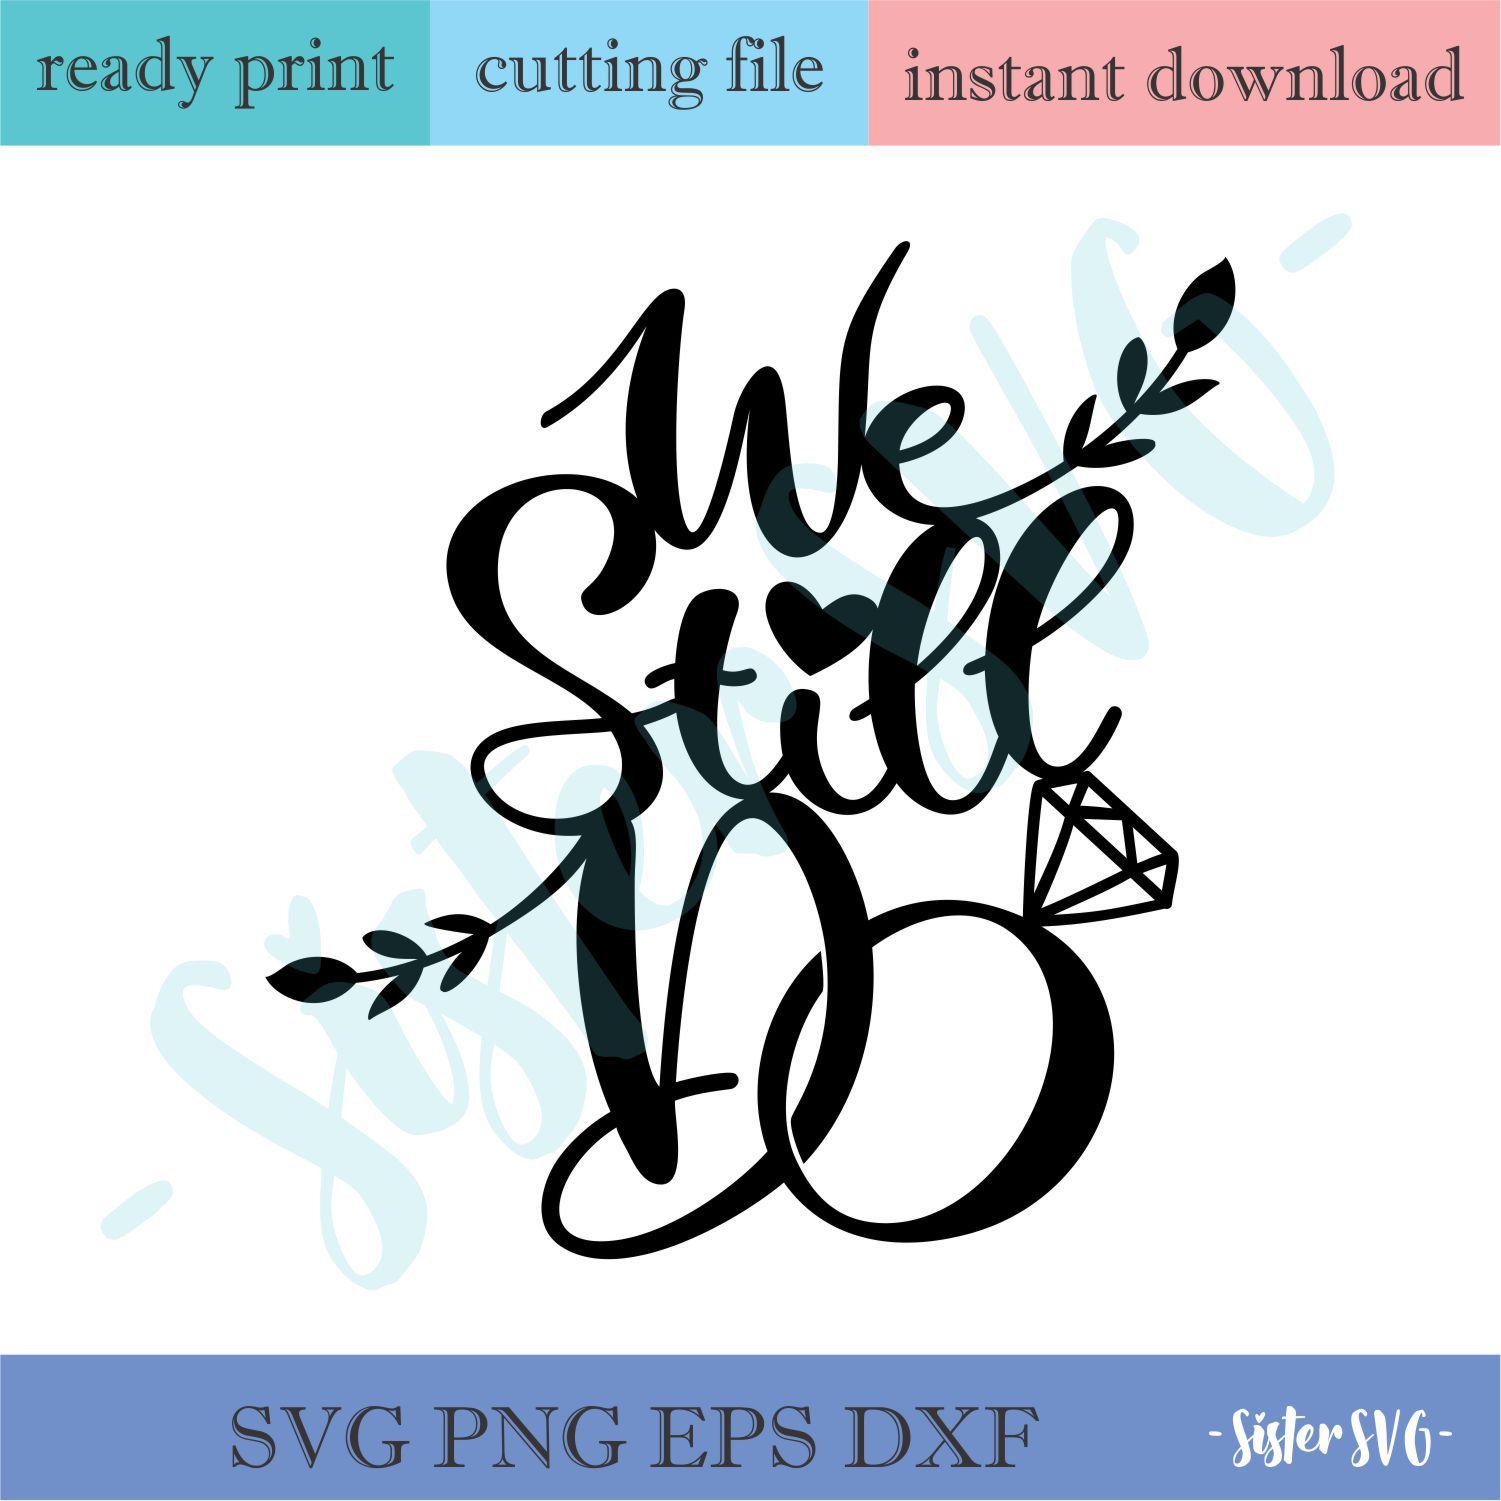 Pin on Cutting File for Cricut, Silhouette Studio, SVG.